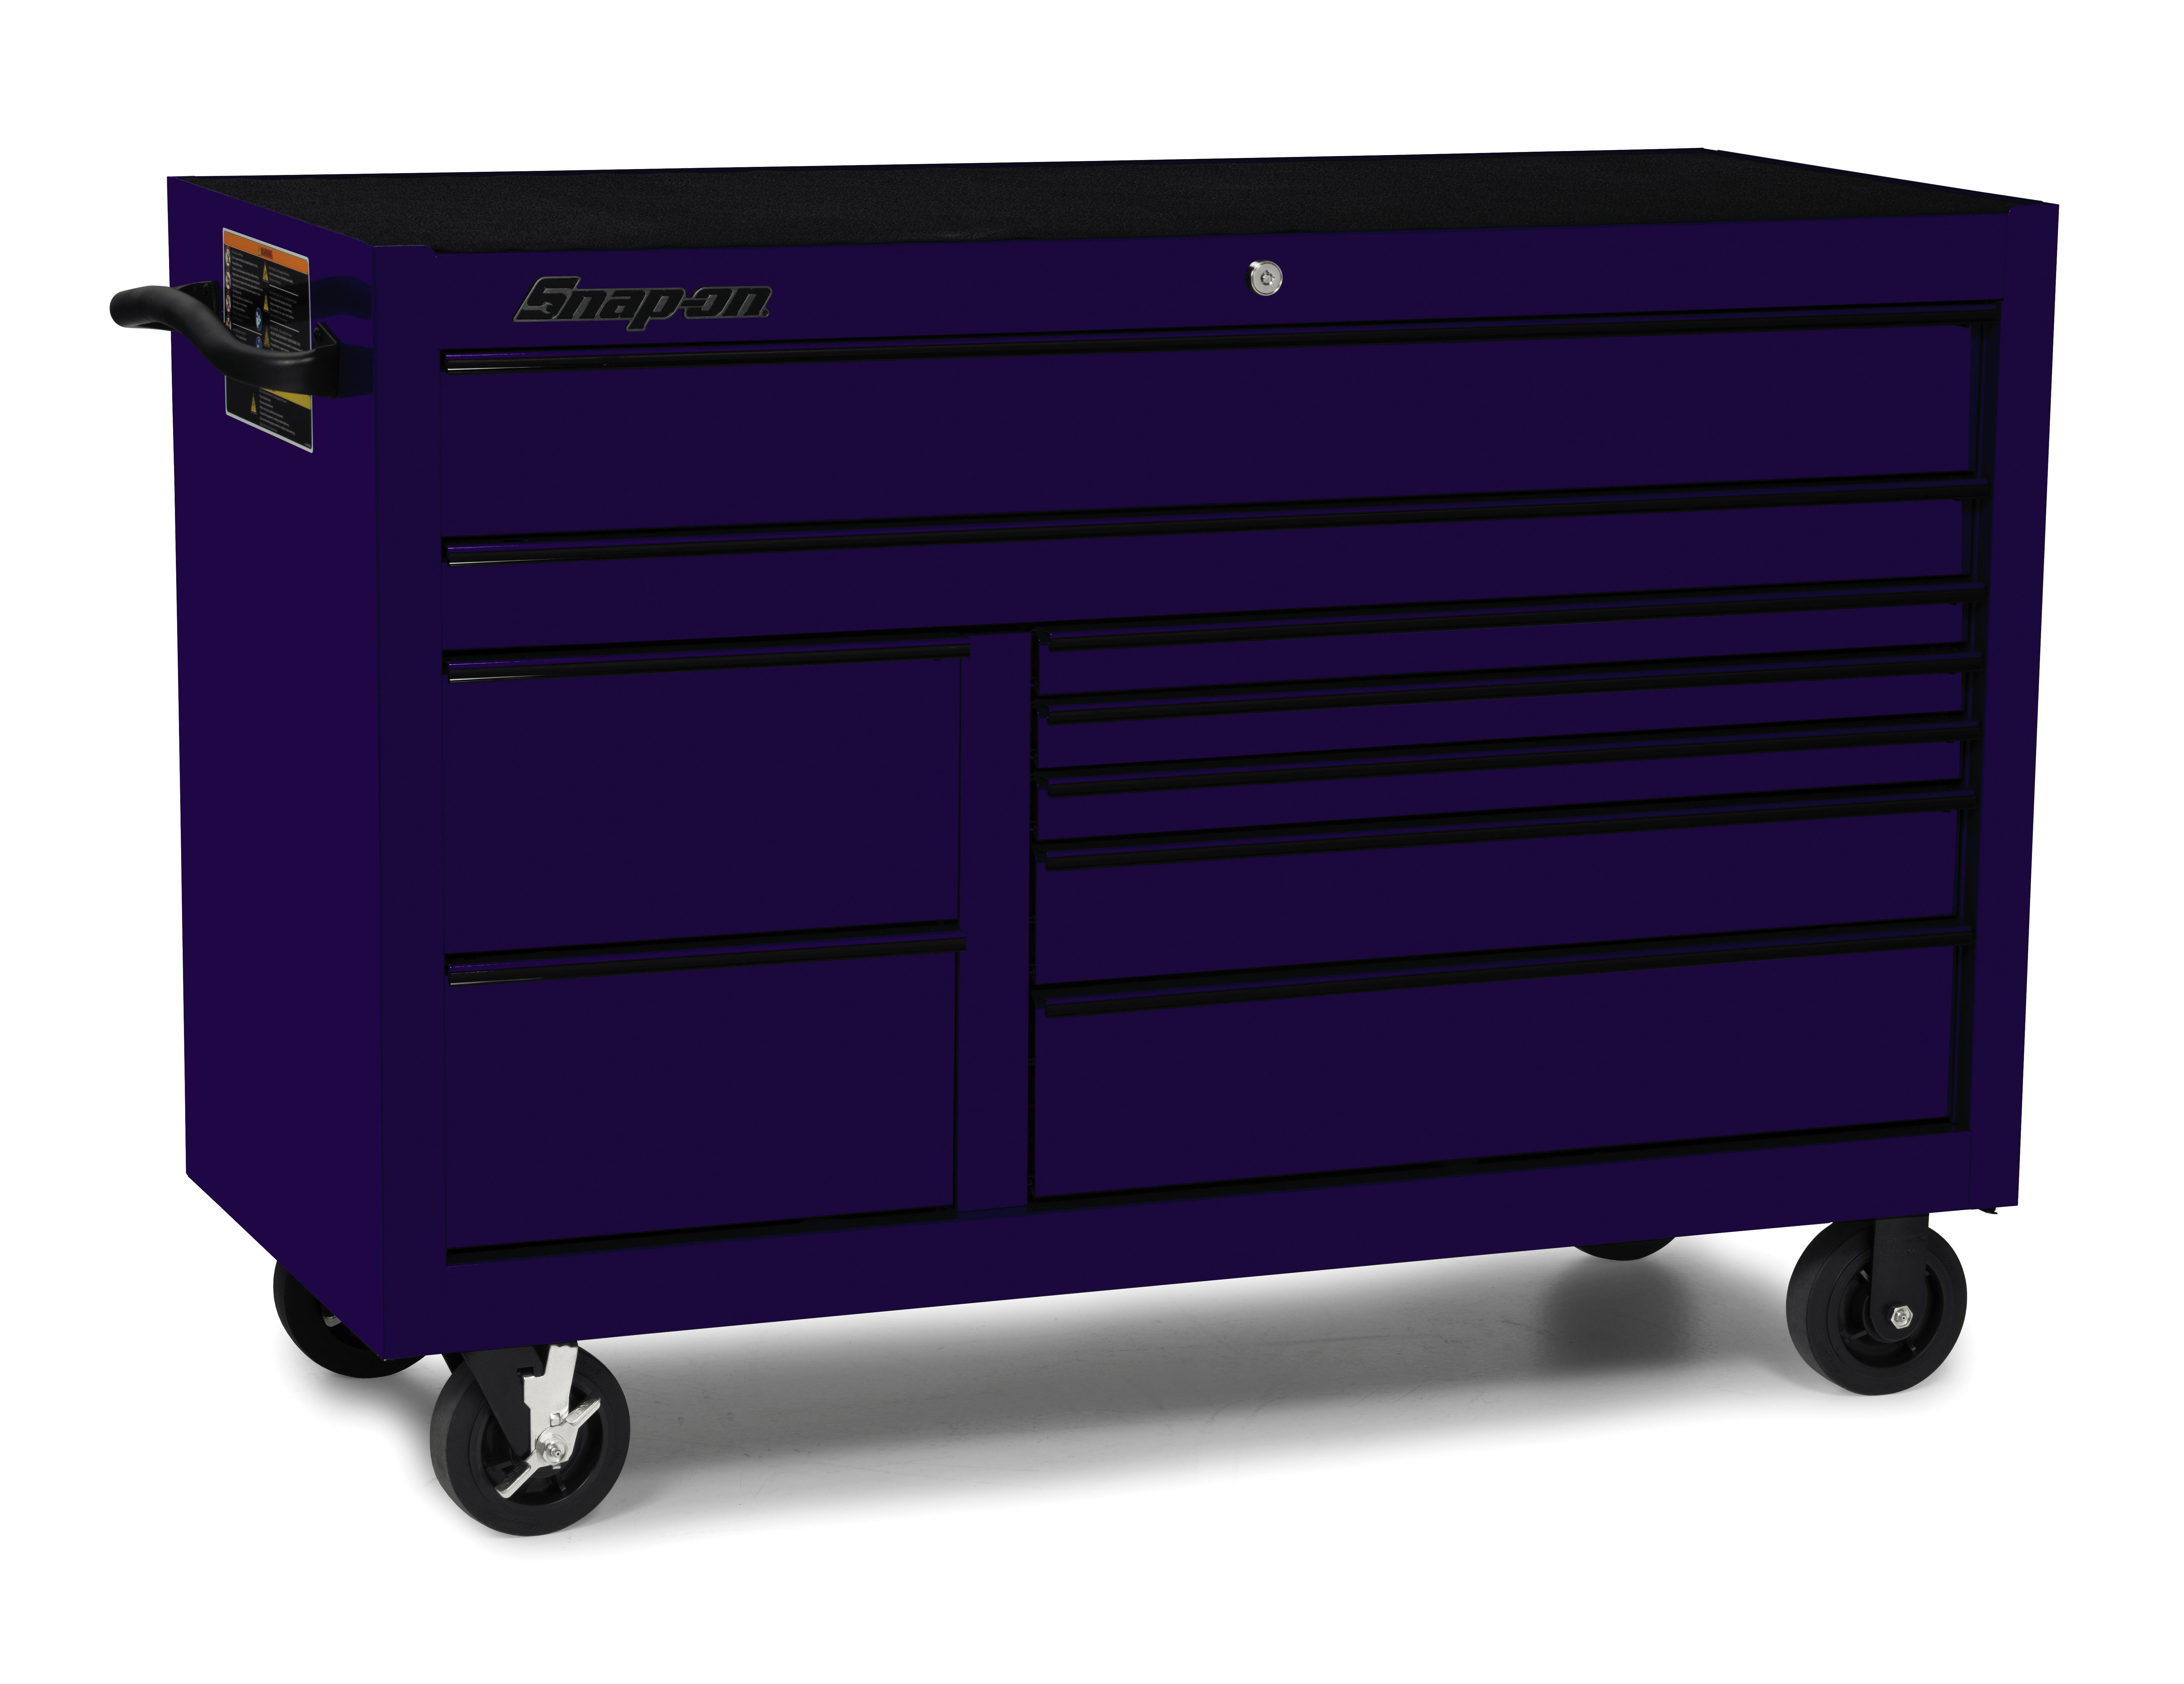 84 13-Drawer Double-Bank EPIQ™ Series Roll Cab (Plum Radical Purple)